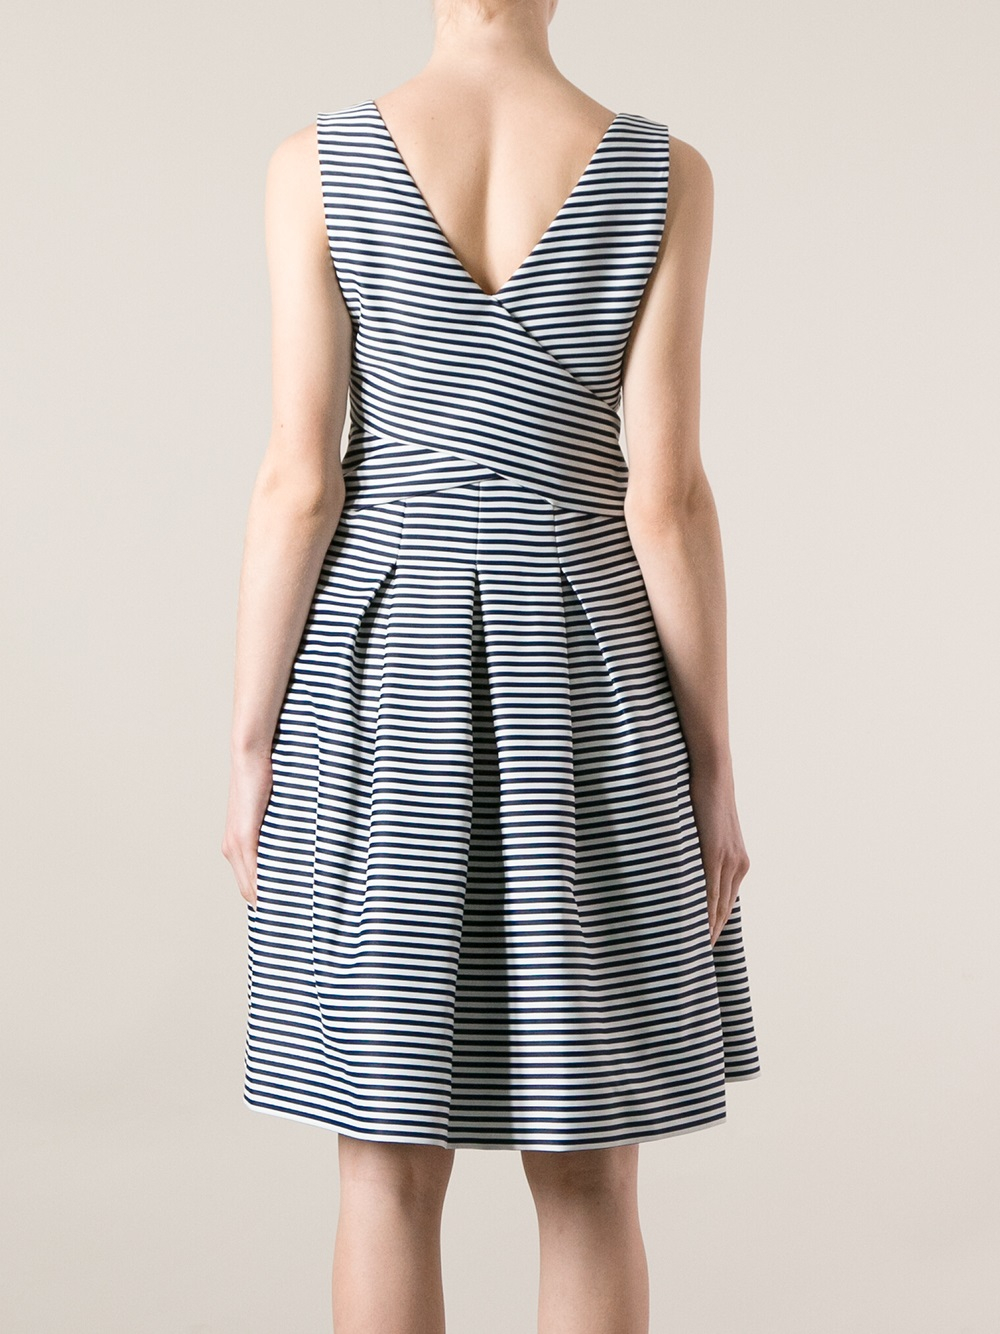 Lyst - Halston Striped Dress in Blue